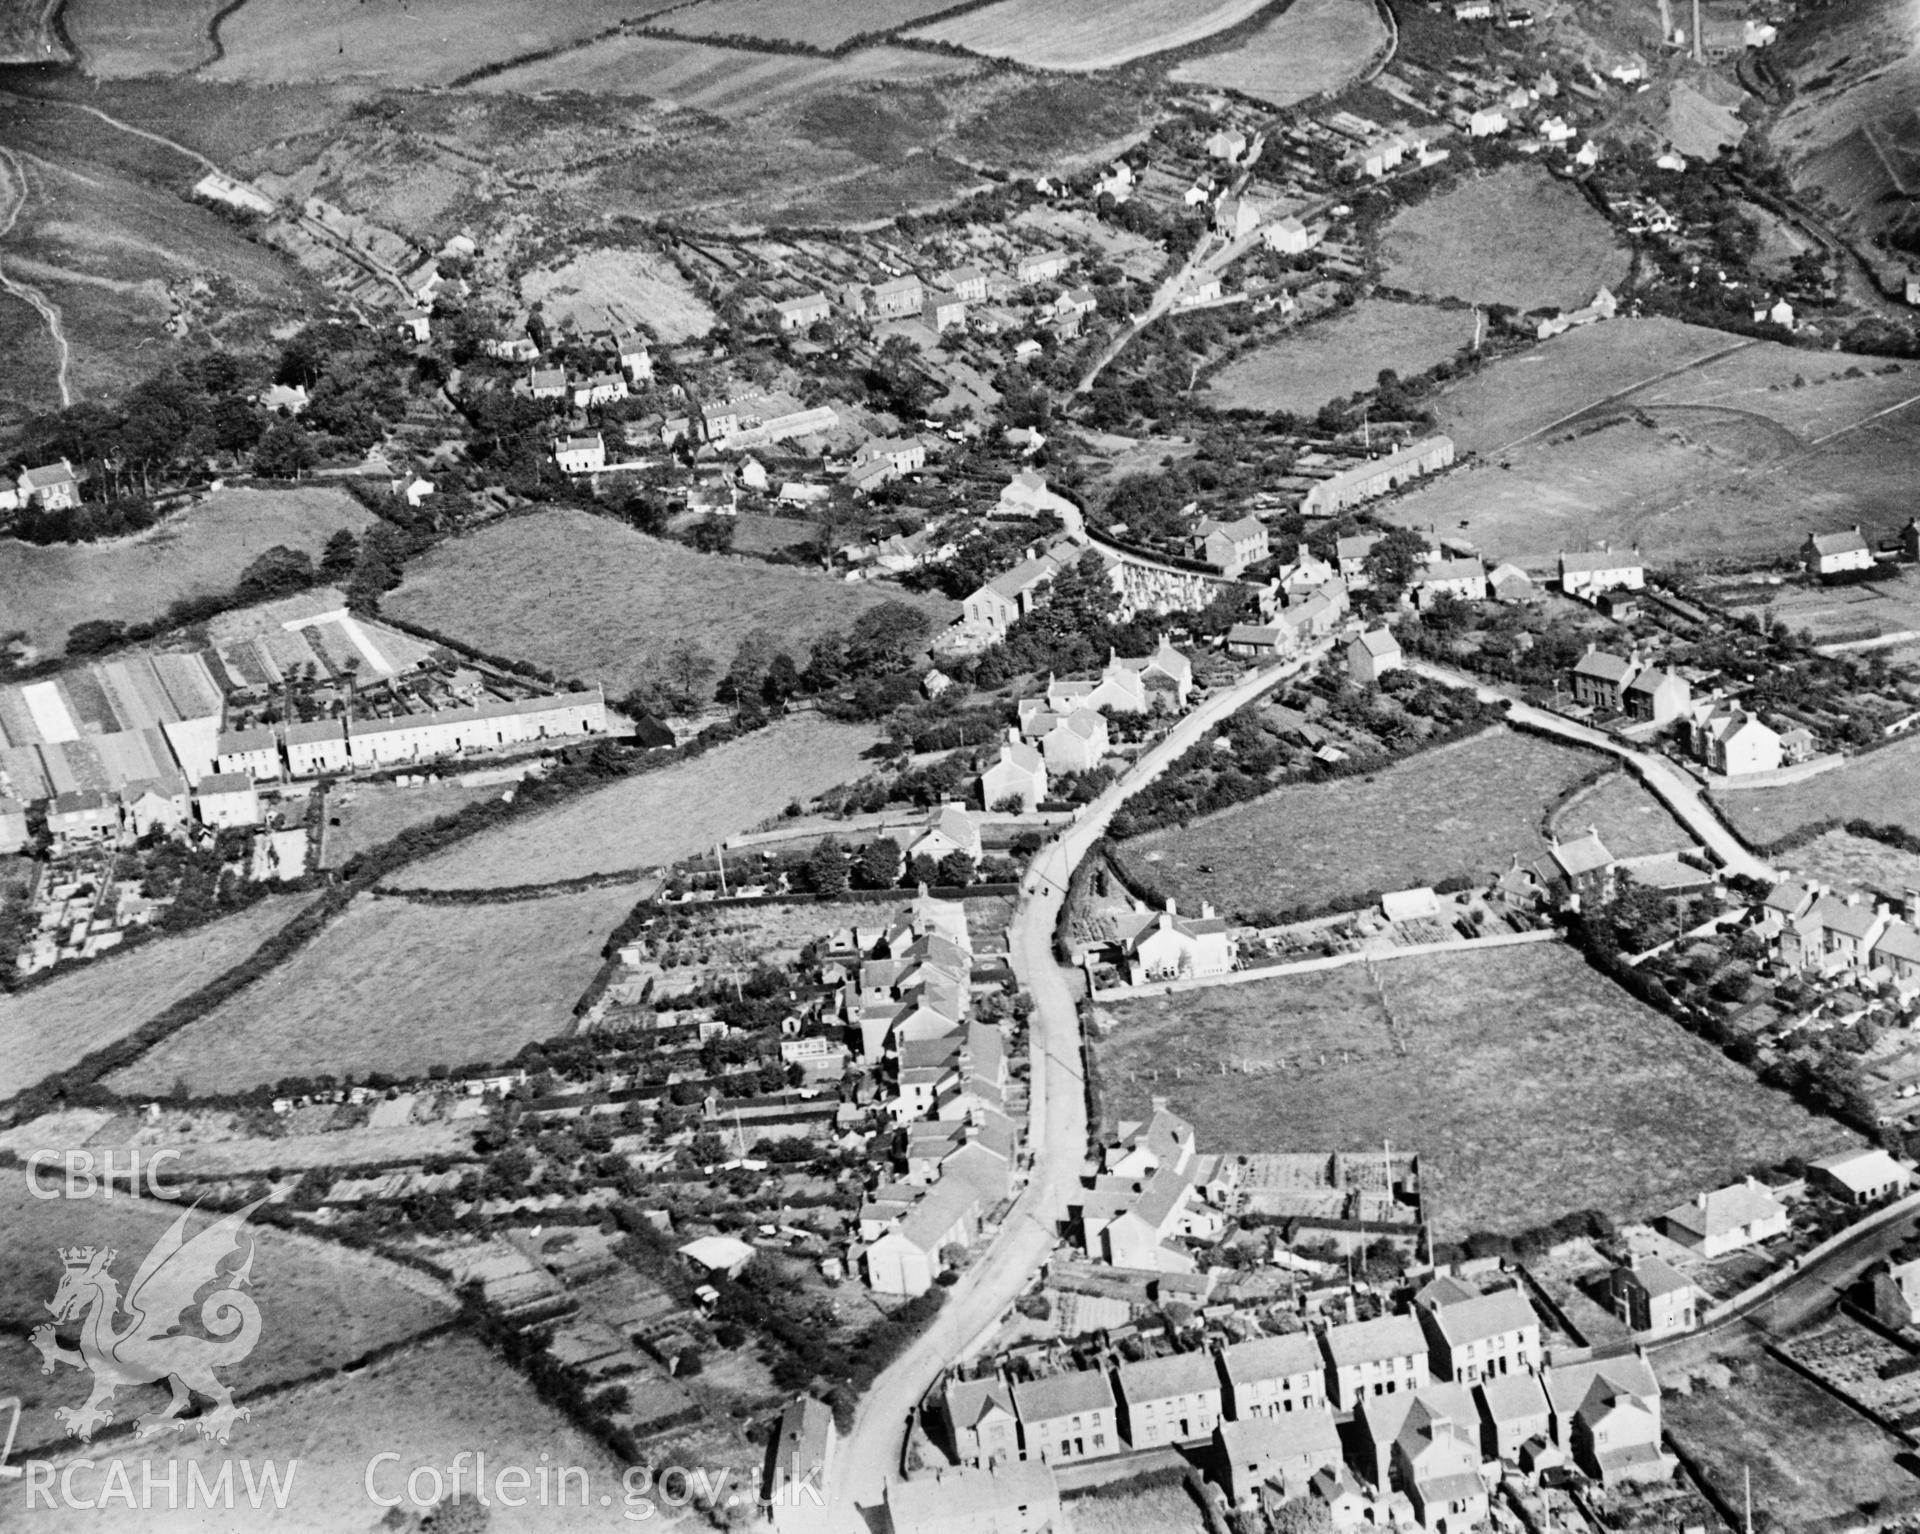 View of Achddu area of Burry Port showing Jerwsalem chapel. Oblique aerial photograph, 5?x4? BW glass plate.